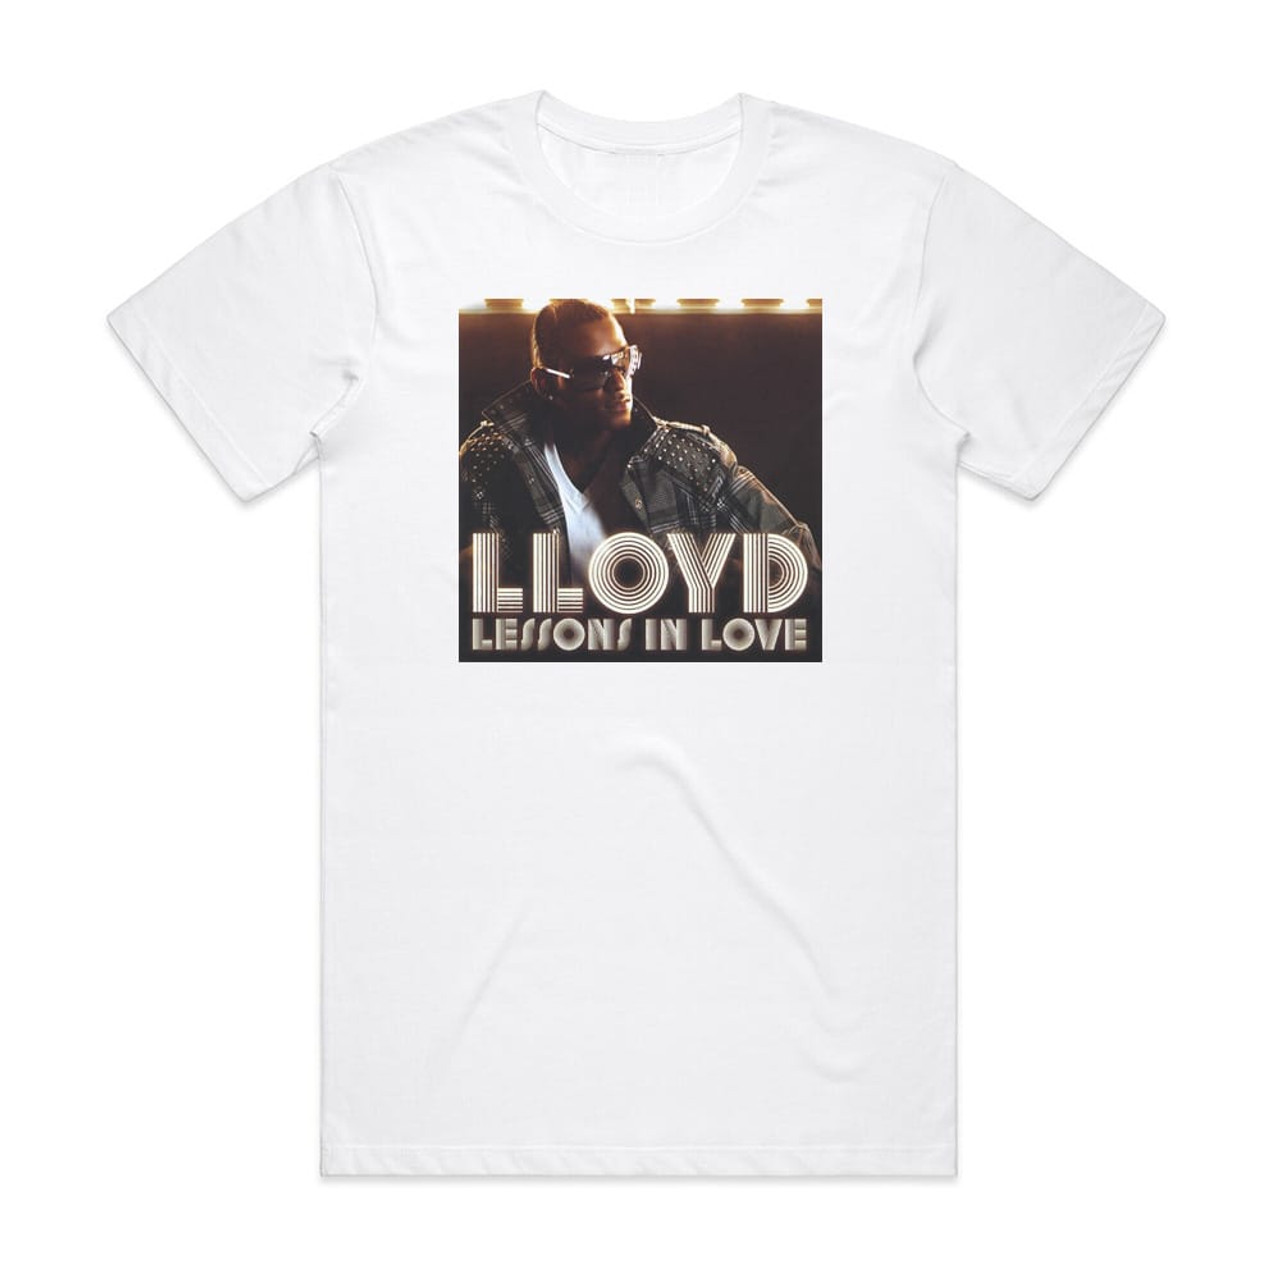 Lloyd Lessons In Love Album Cover T-Shirt White